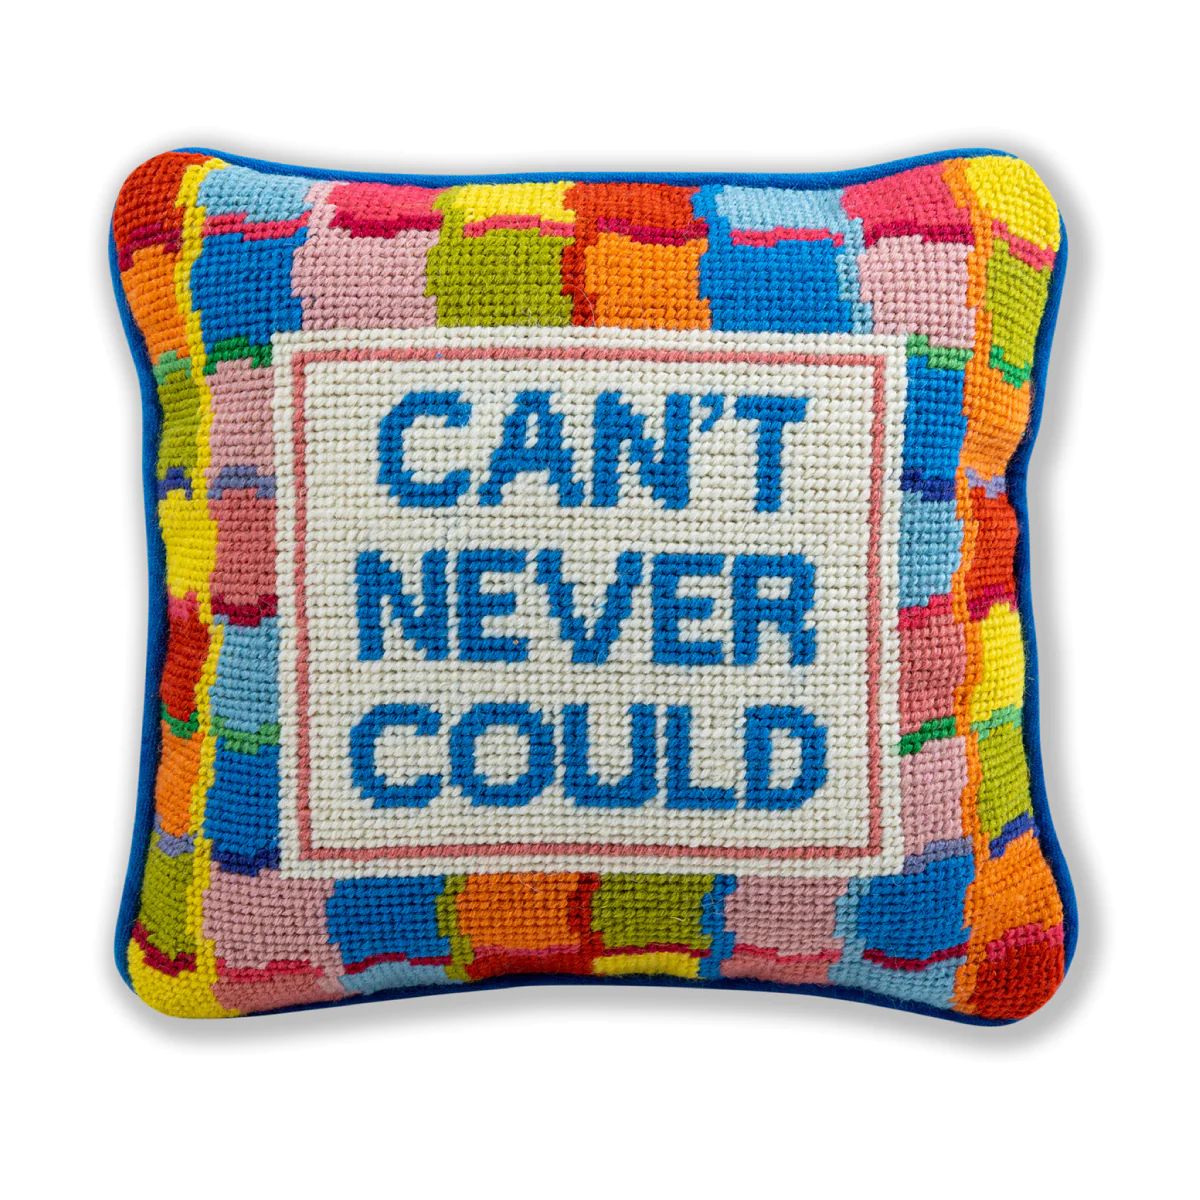 Furbish Studio - Can't Never Could Needlepoint Pillow | Furbish Studio